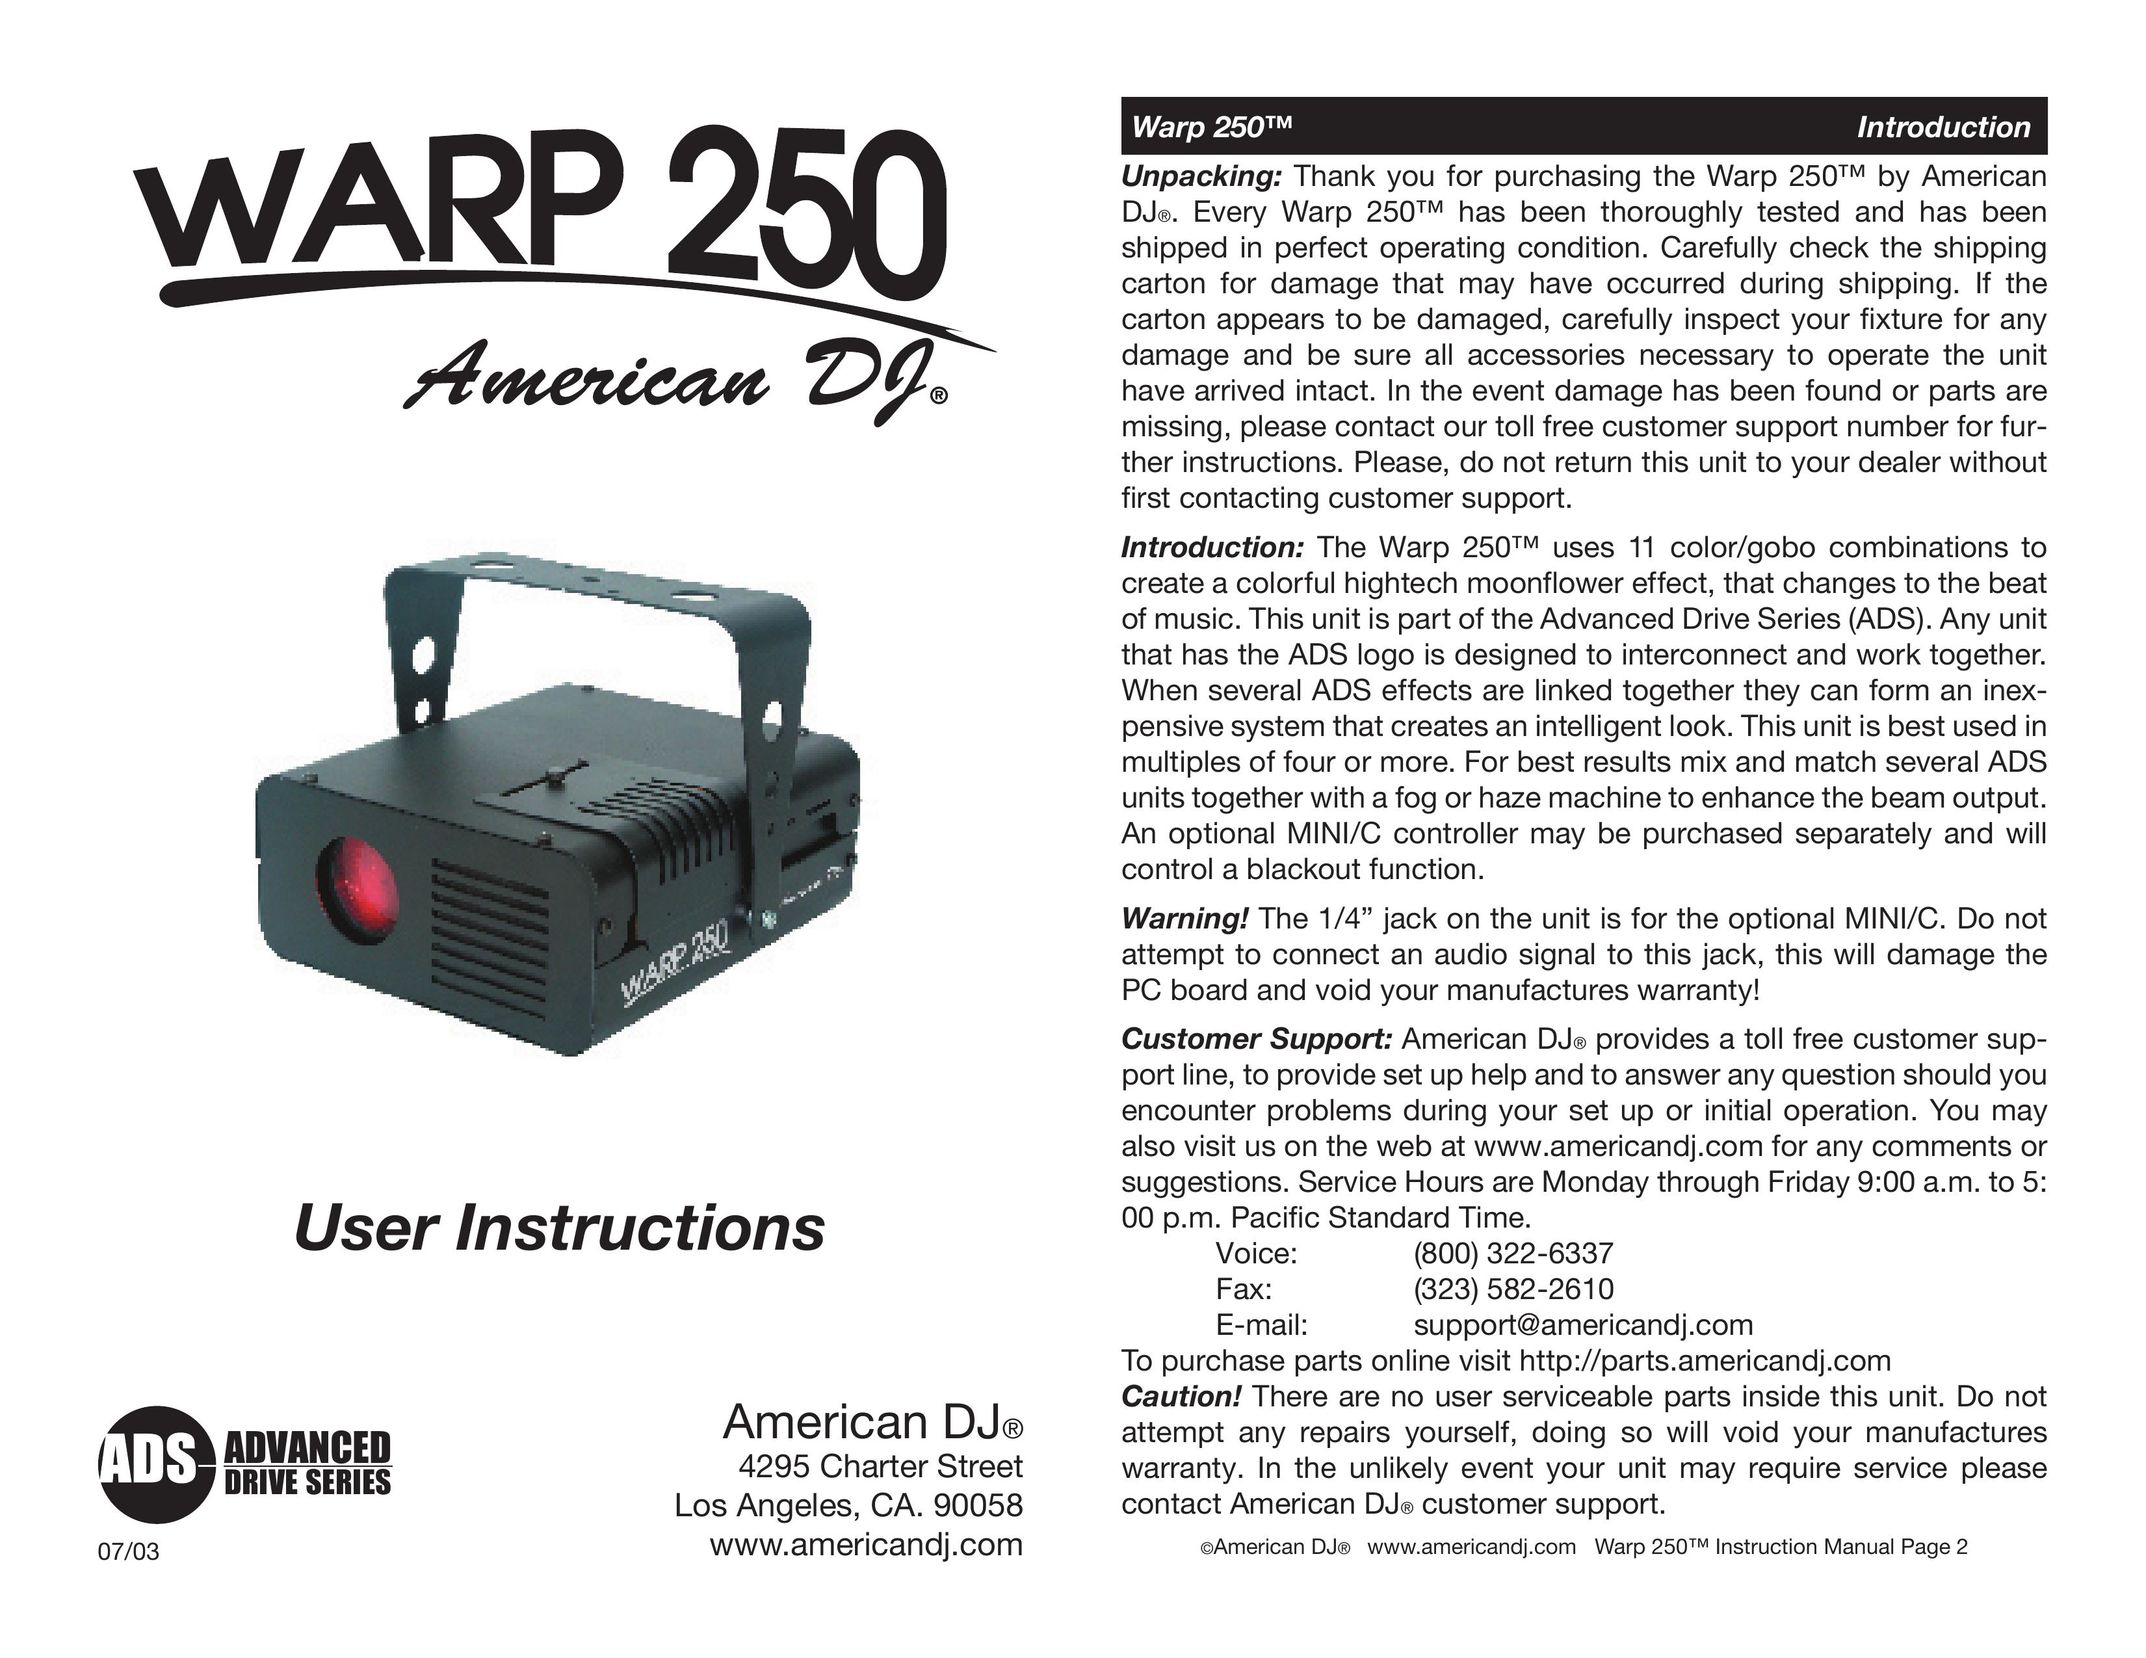 American Music & Sound Warp 250 Indoor Furnishings User Manual